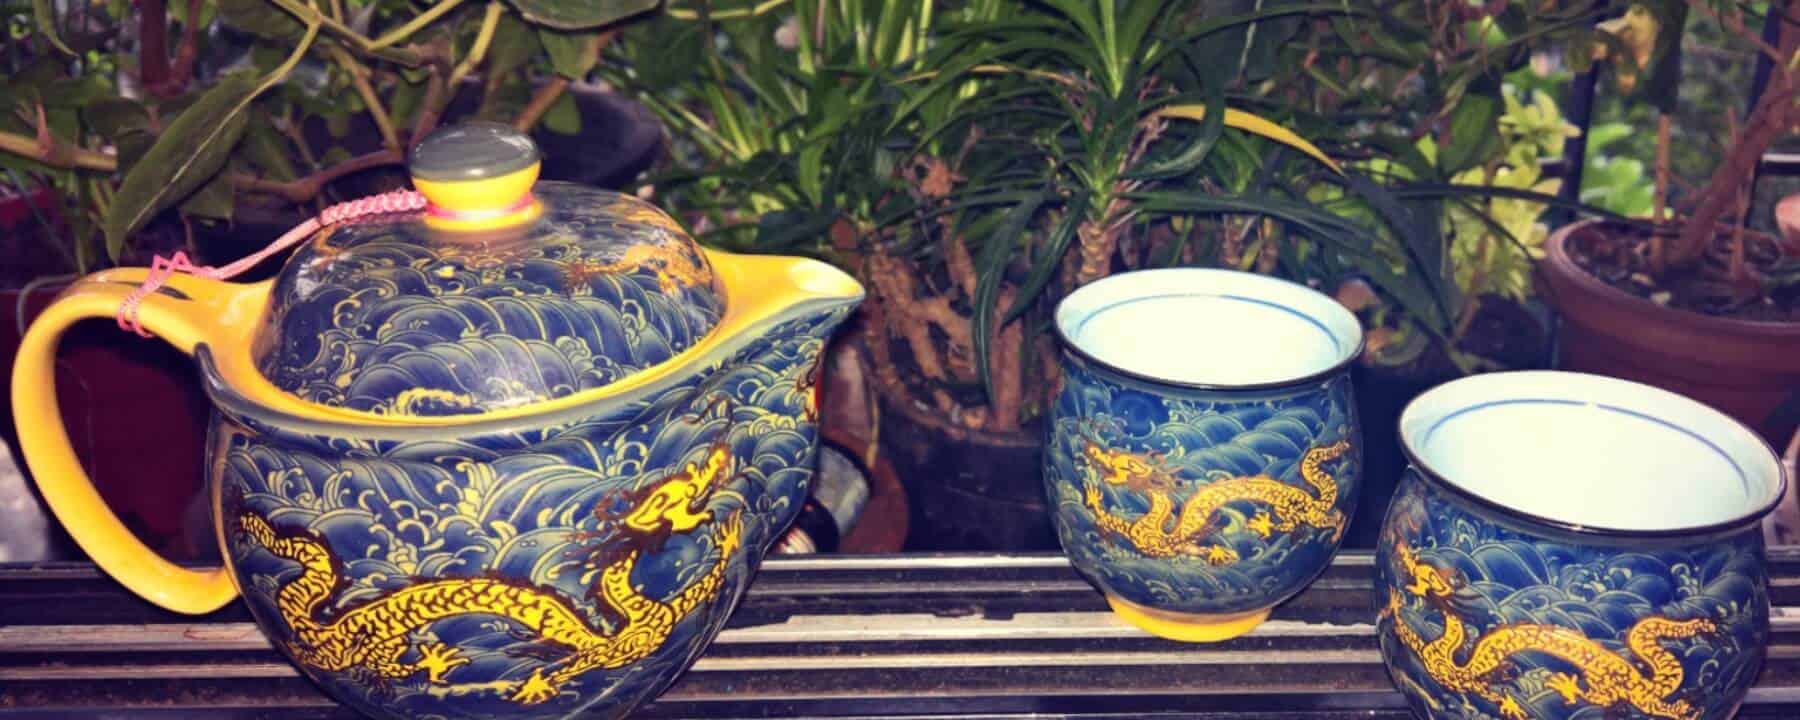 A tea pot and two tea cups